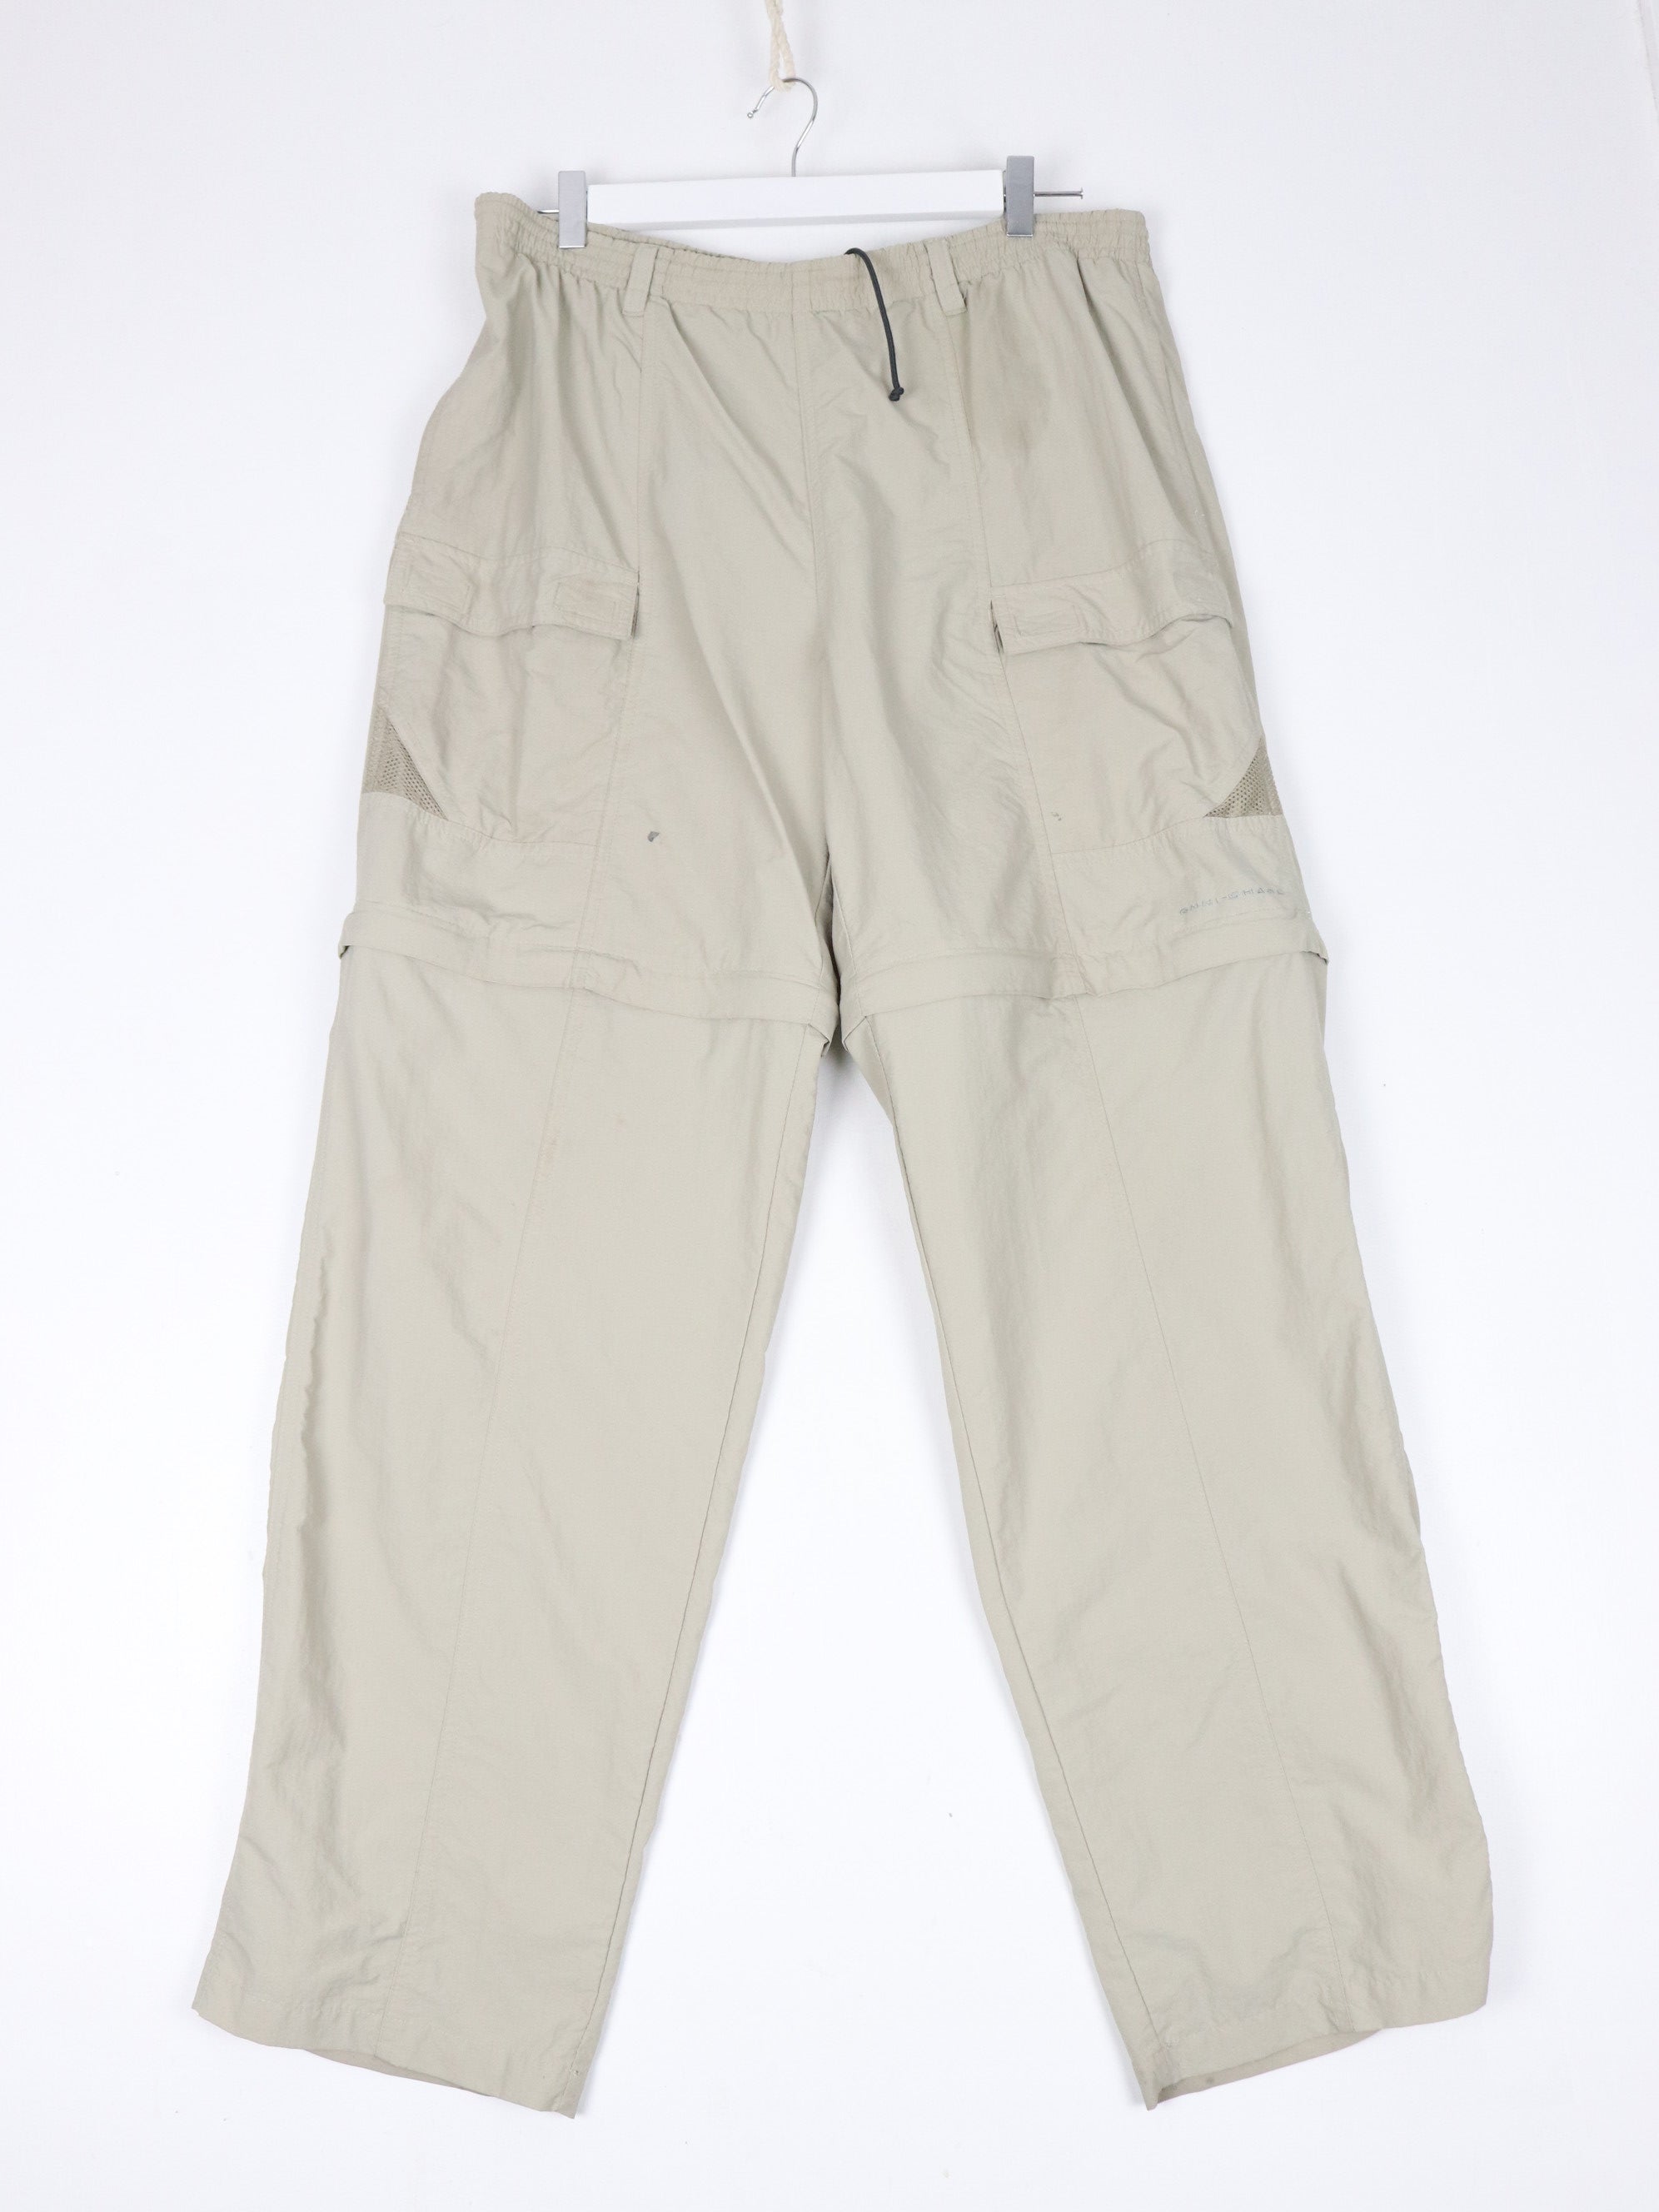 Columbia Pants Mens Medium Beige Convertible Fishing Outdoors 34 x 31 –  Proper Vintage